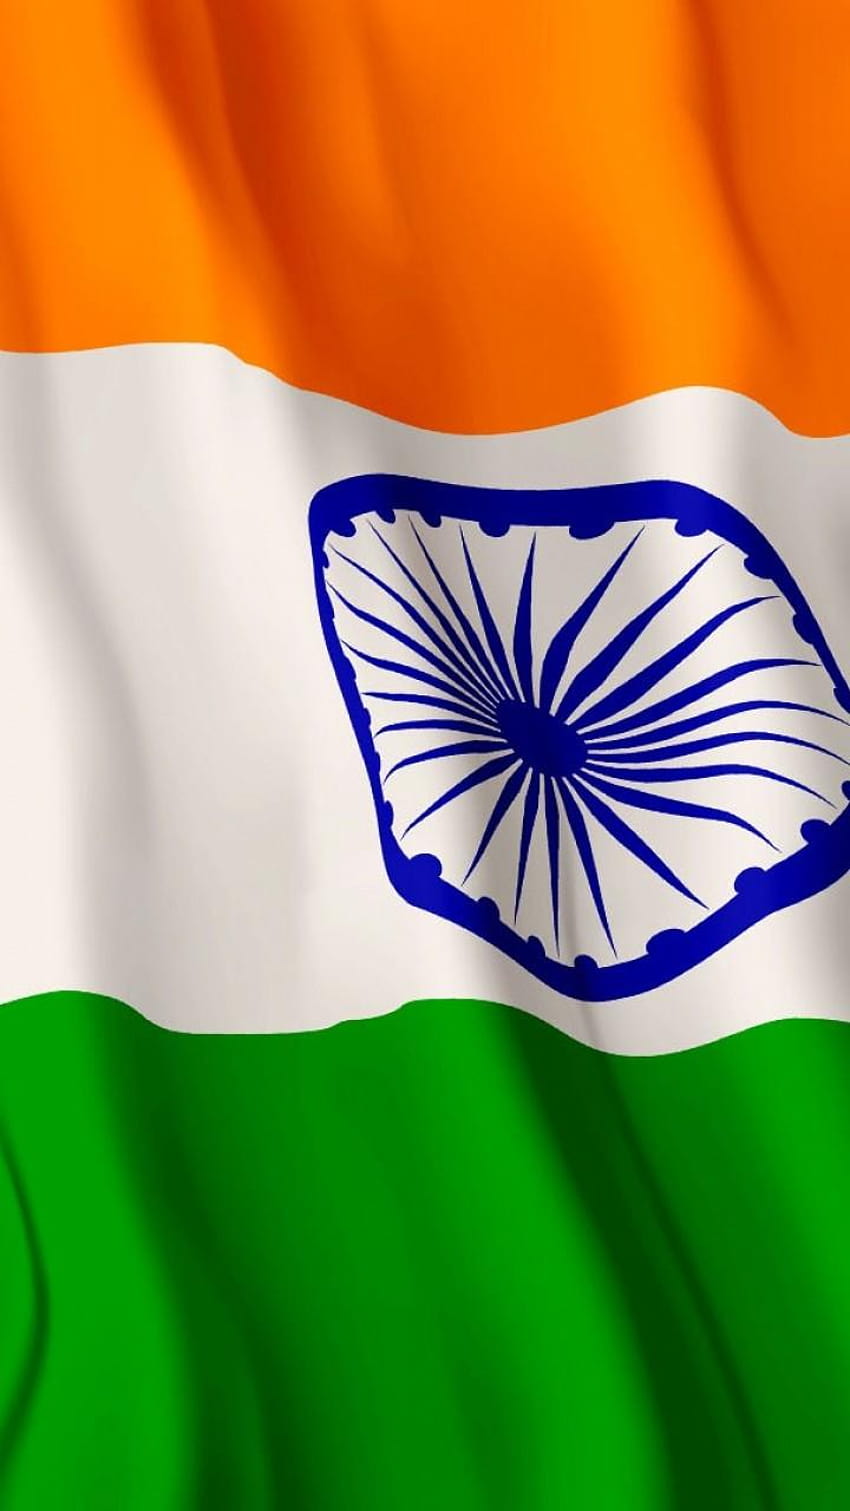 Indian Flag Symbol Png Picture  Indian Flag Wallpaper Free Download PNG  Image  Transparent PNG Free Download on SeekPNG